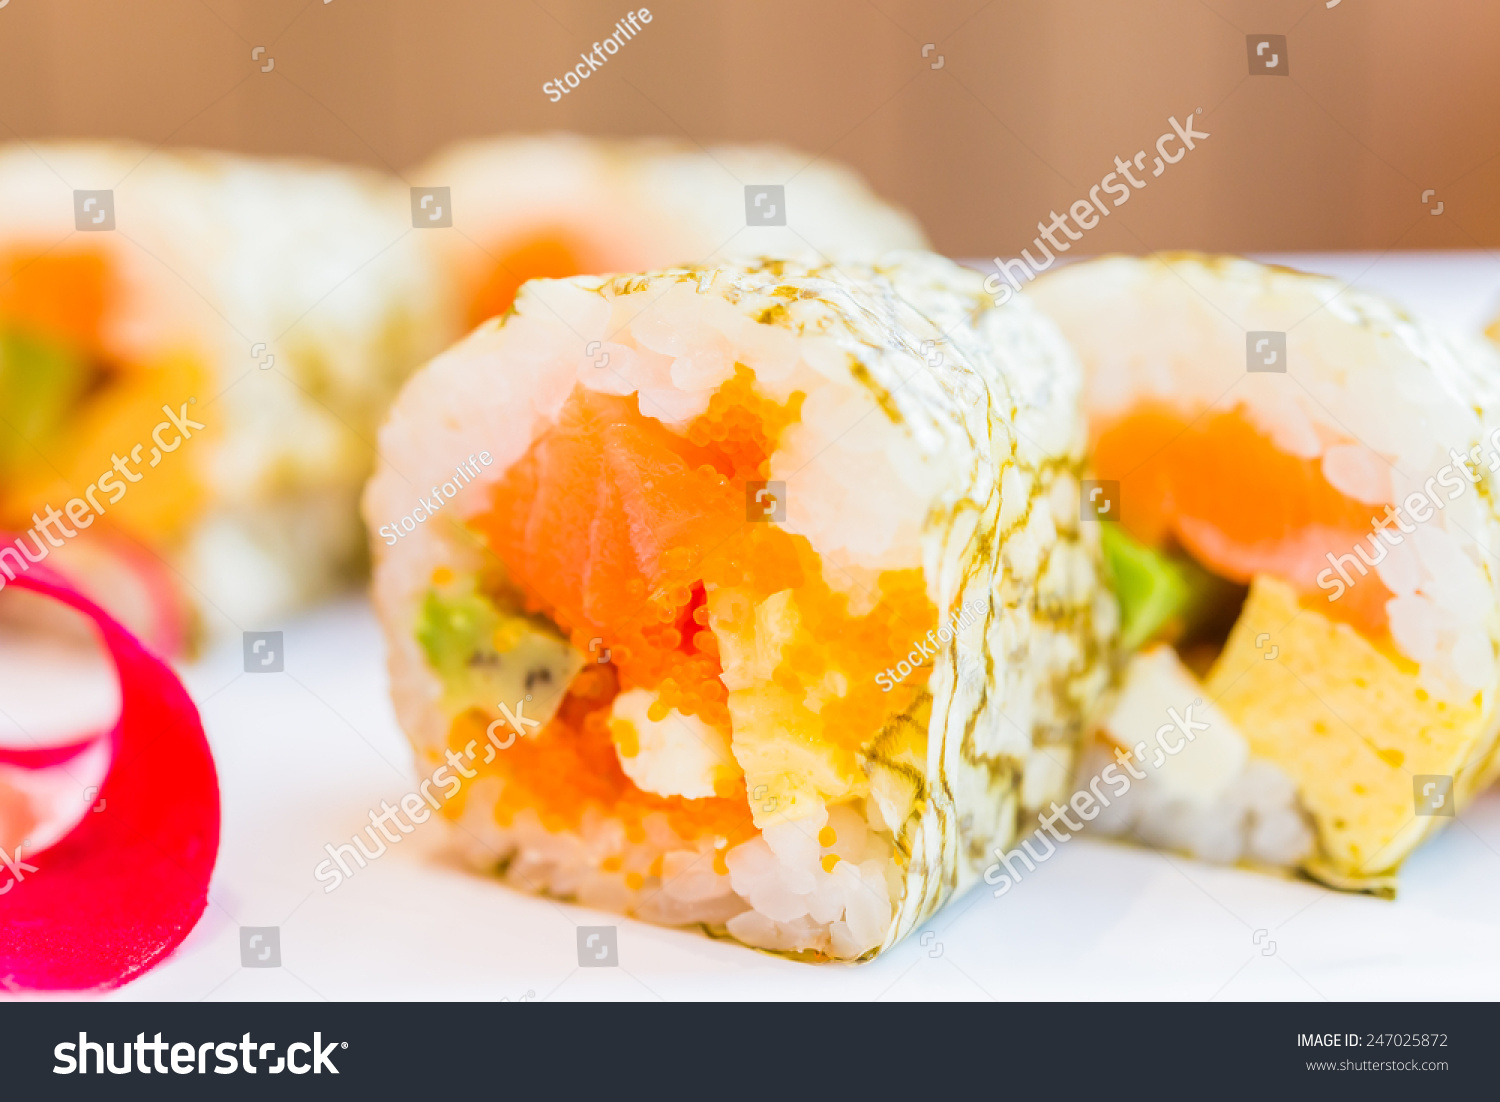 Salmon sushi roll maki - japanese food - selective focus #247025872